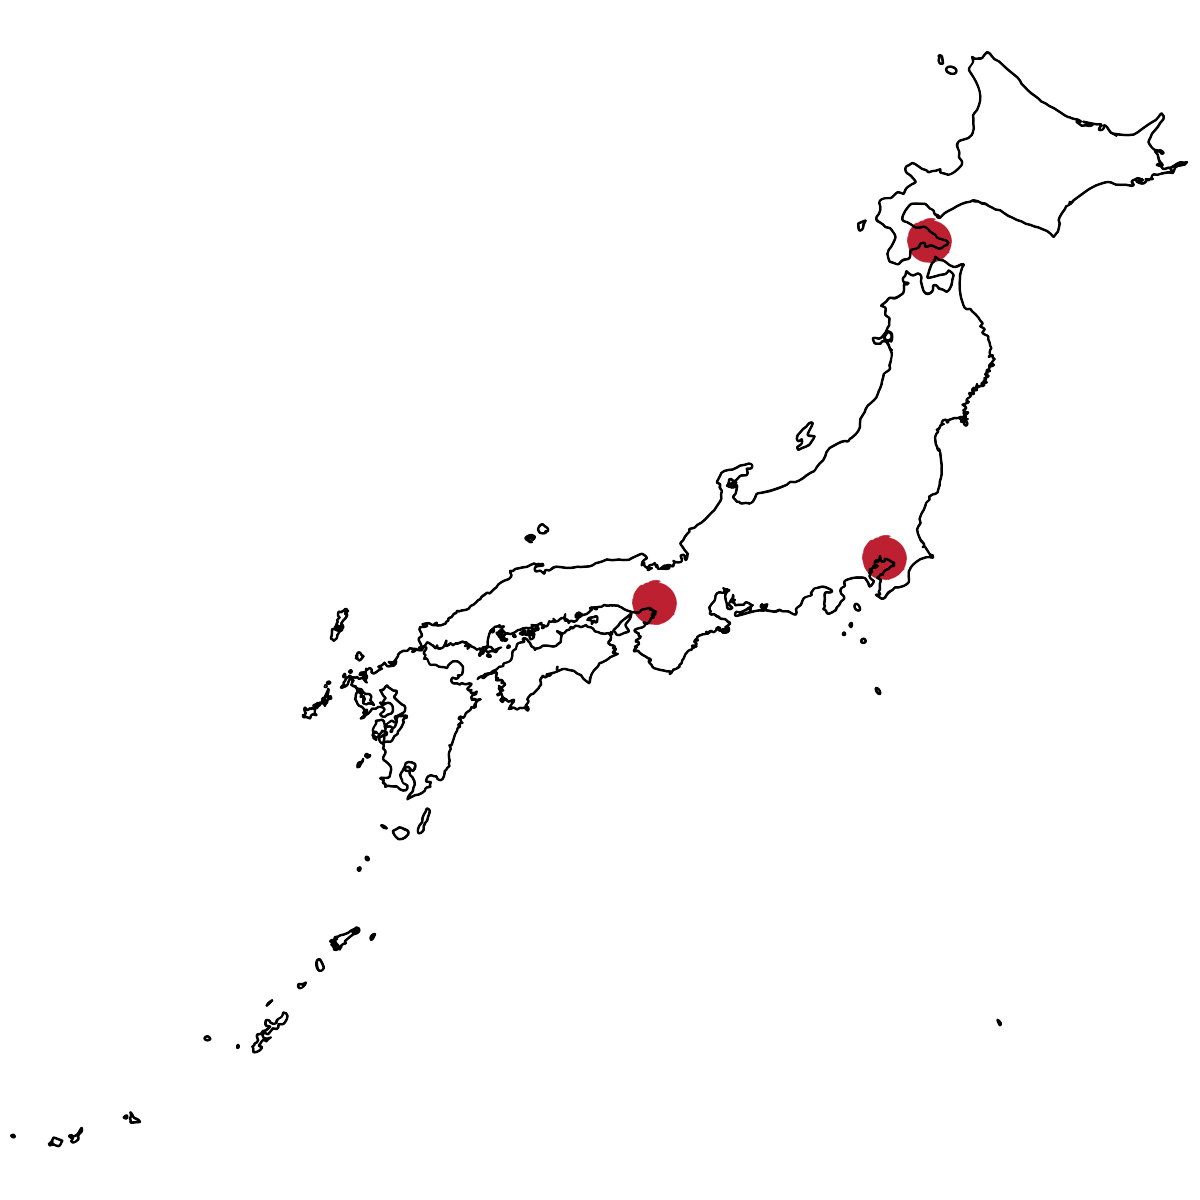 Sample rotation of a Japanese Judge